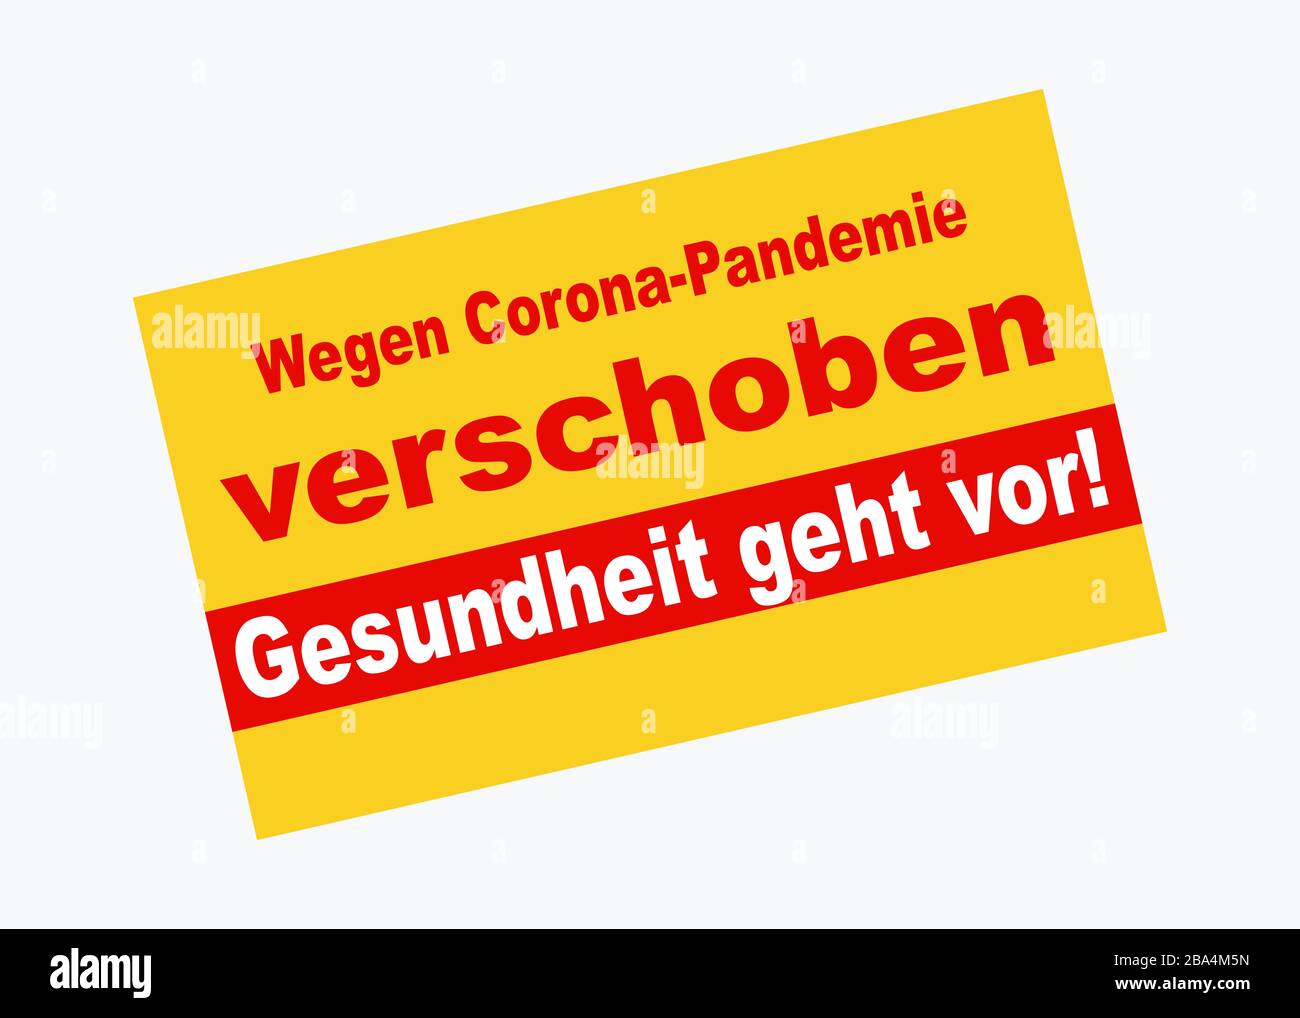 Cartello informativo. Wegen corona pandemie verschoben. Gesundheit geht vor! (inglese:rinviato a causa di una pandemia corona. Salute prima!) Foto Stock